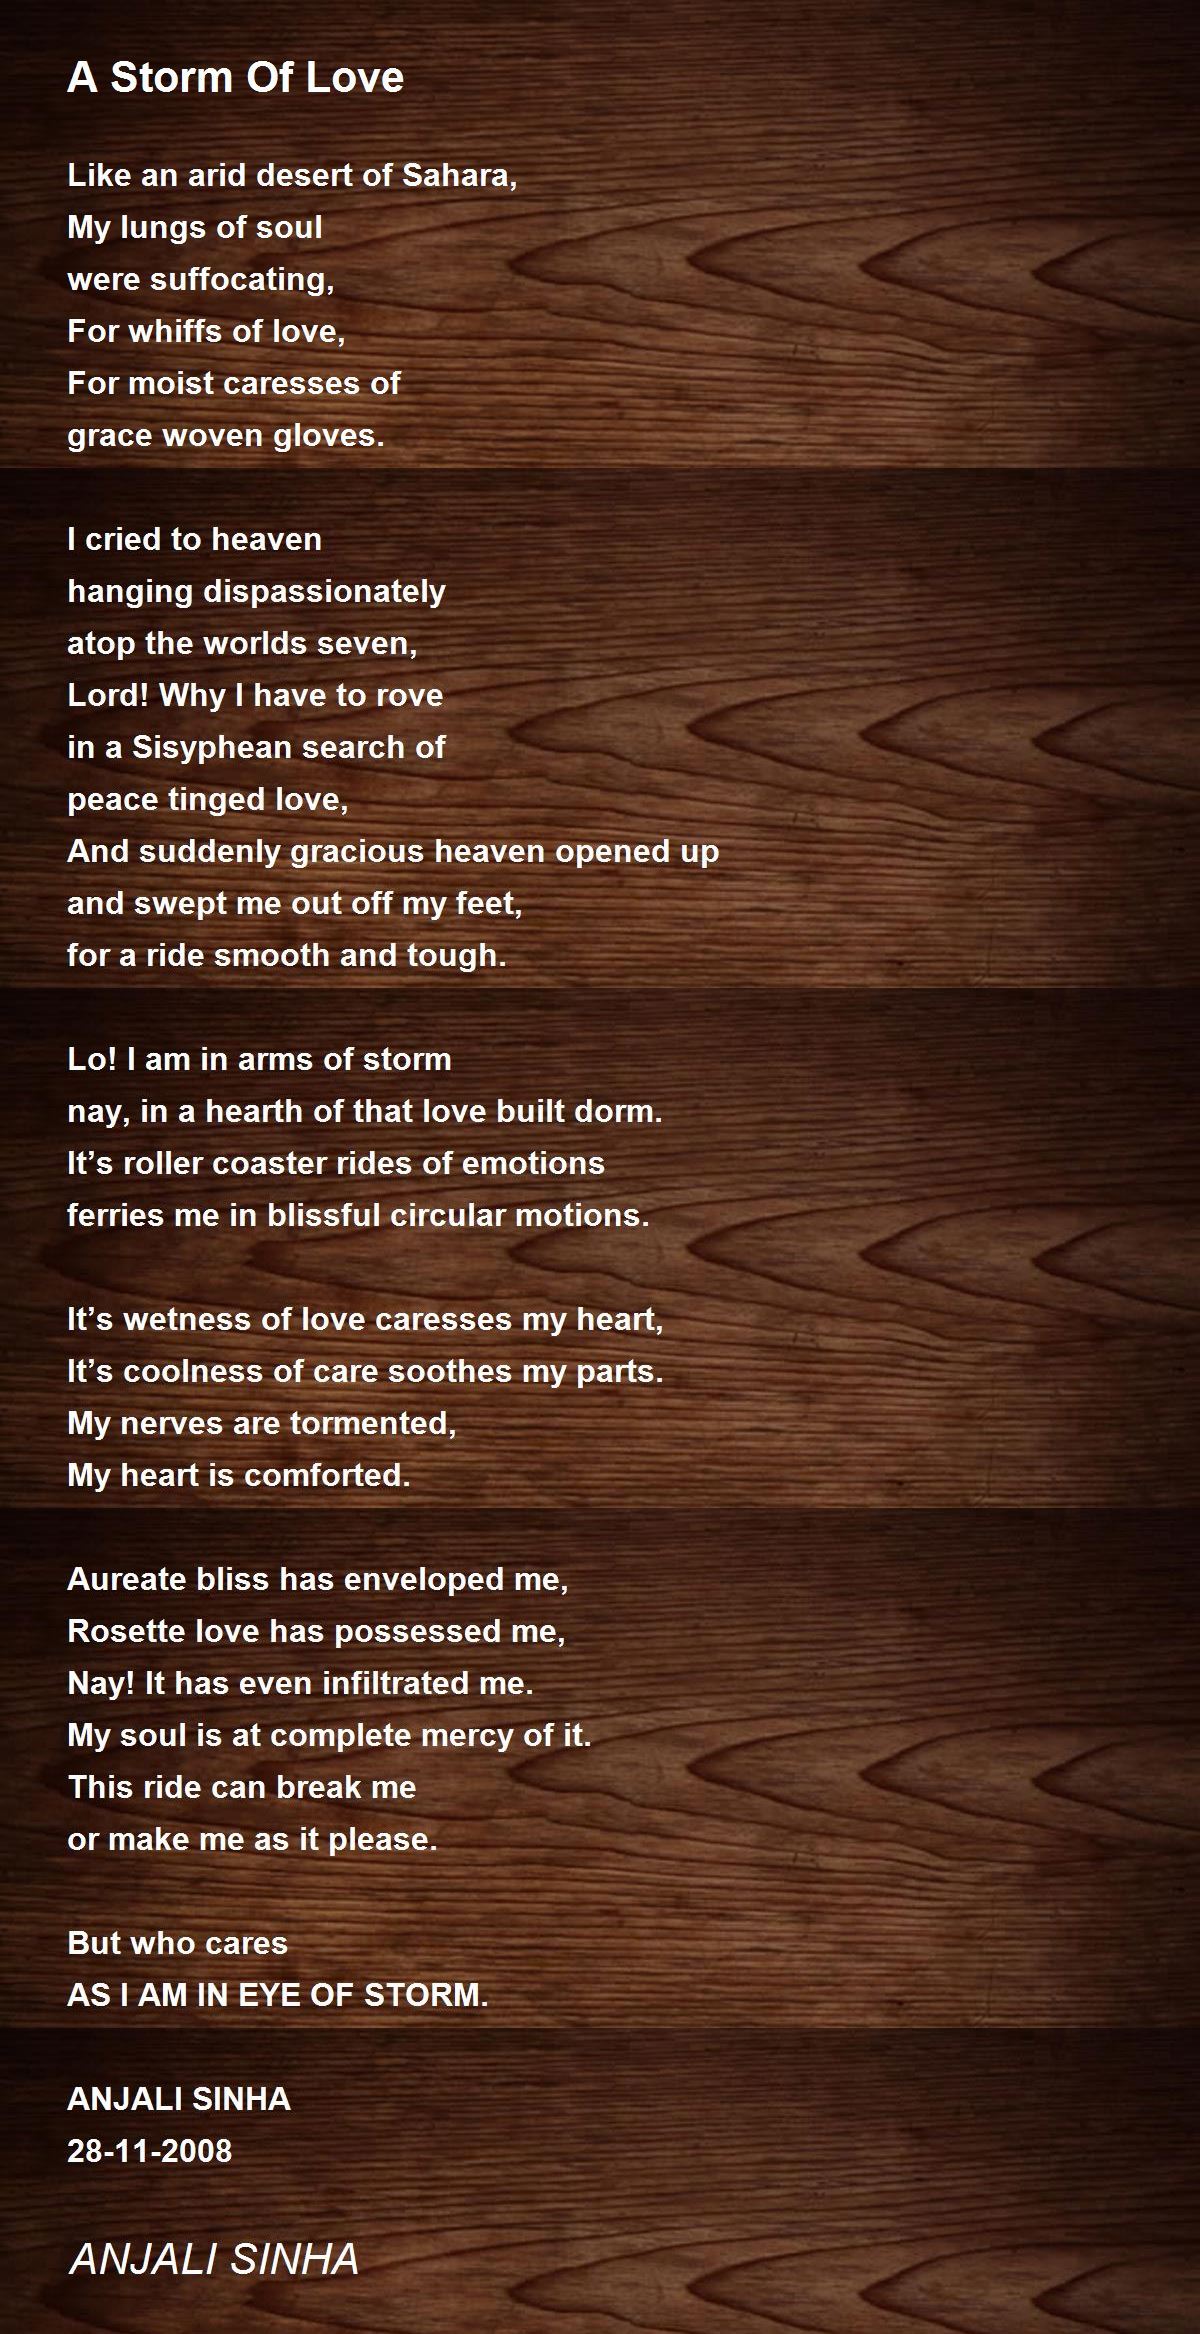 A Storm Of Love Poem by ANJALI SINHA - Poem Hunter